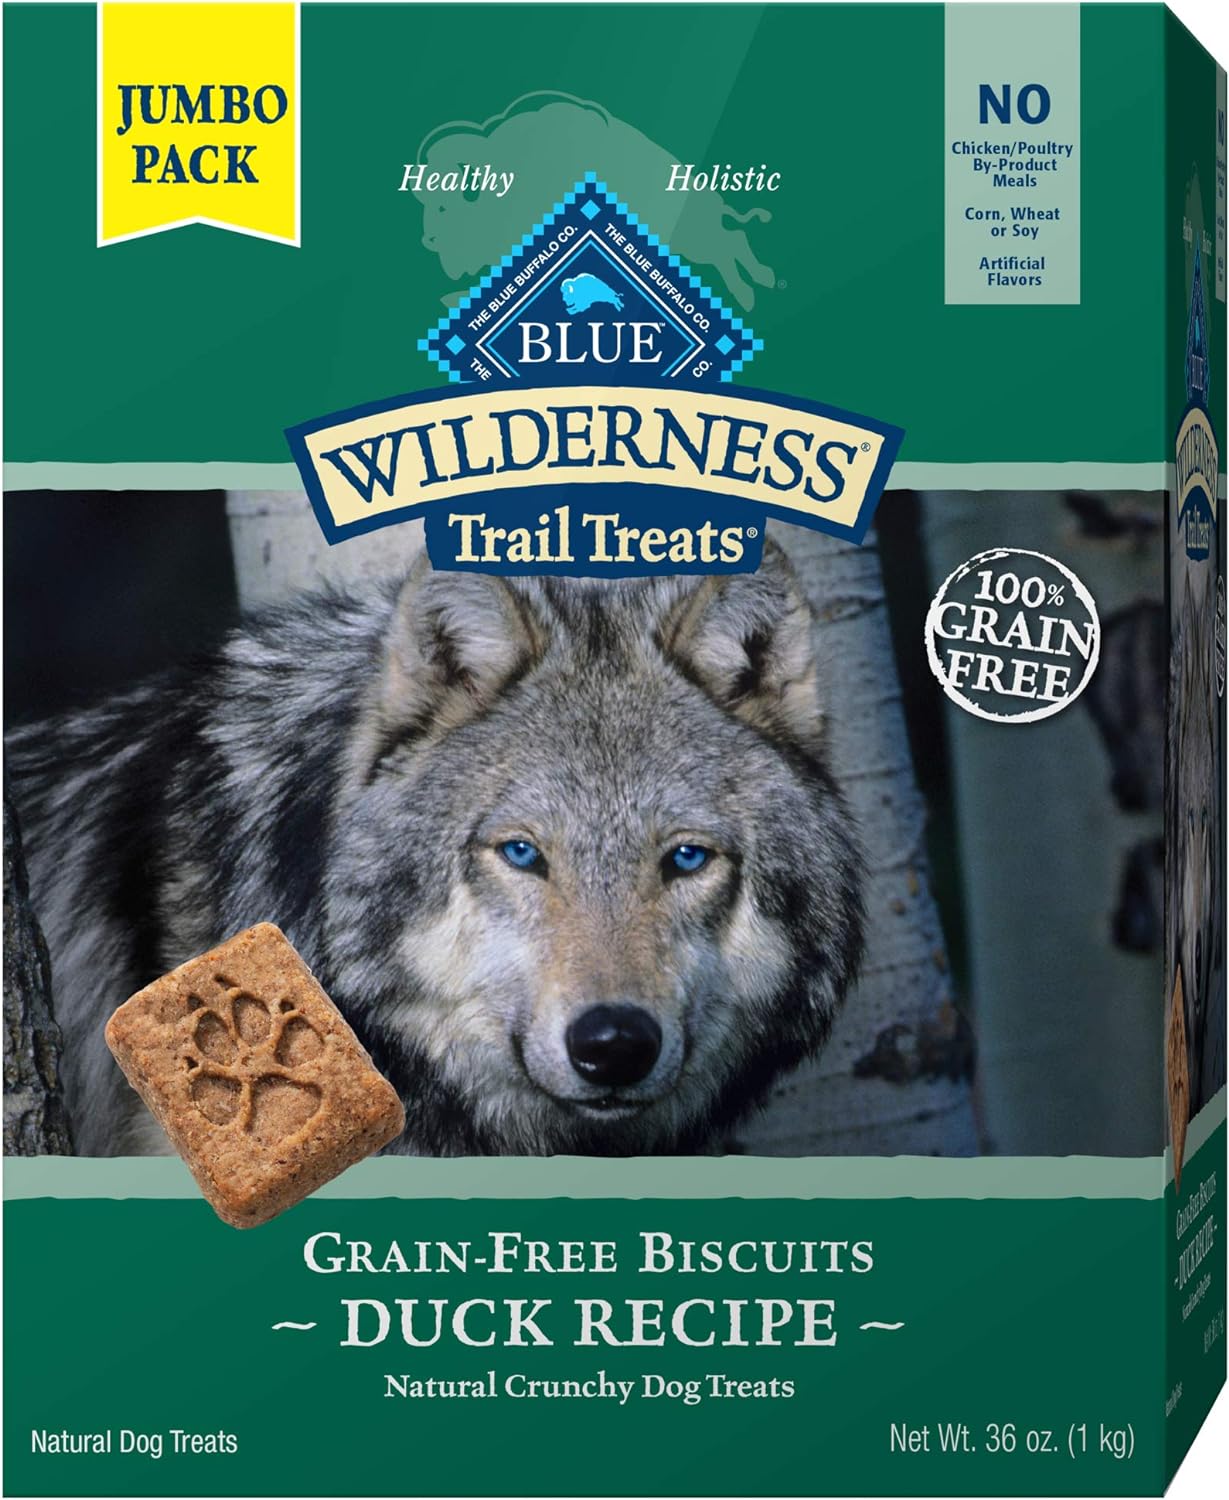 Blue Buffalo Wilderness Trail Treats High Protein Grain Free Crunchy Dog Treats Biscuits, Duck Recipe, 36-oz box